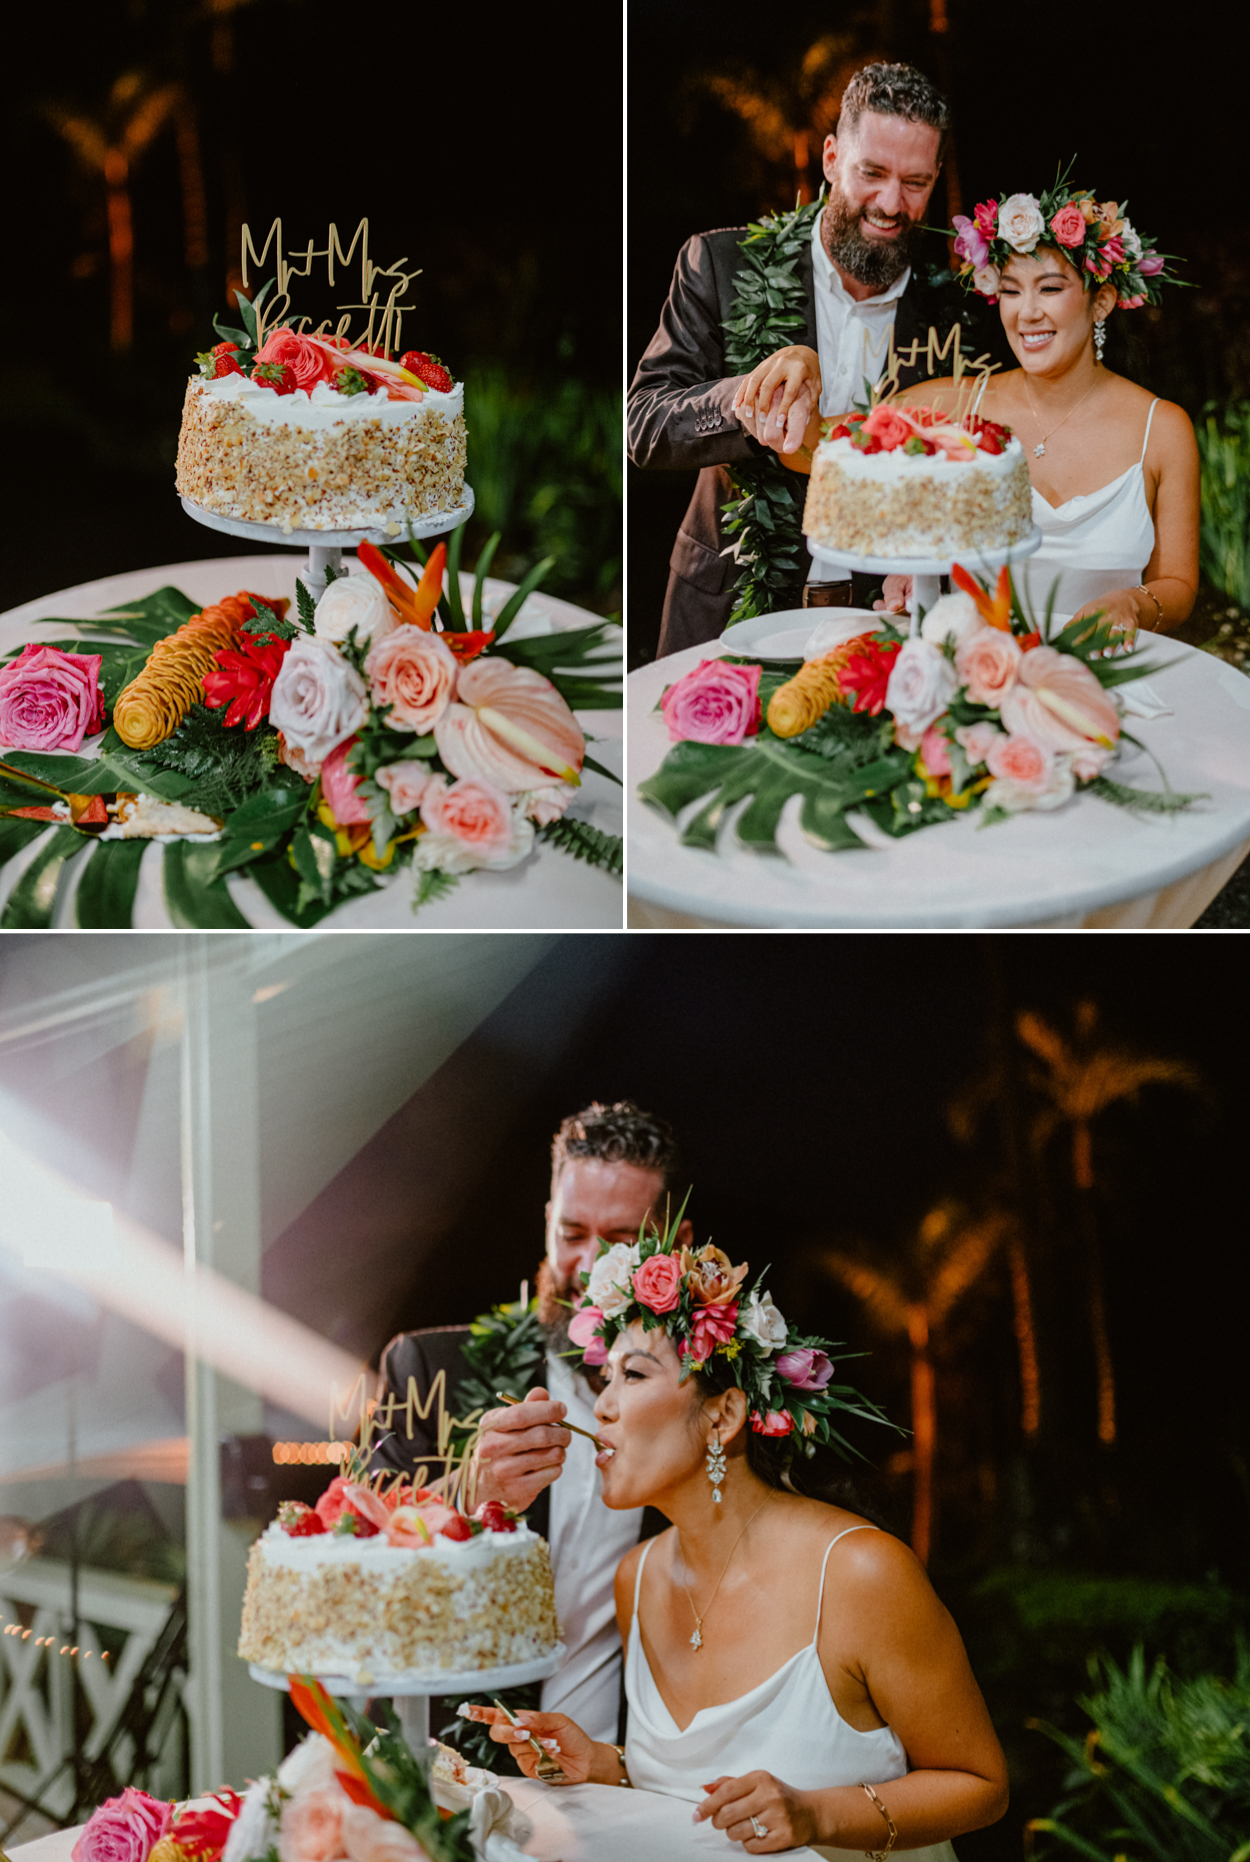 Moli'i fishpond Hawaii wedding cake and couples kiss